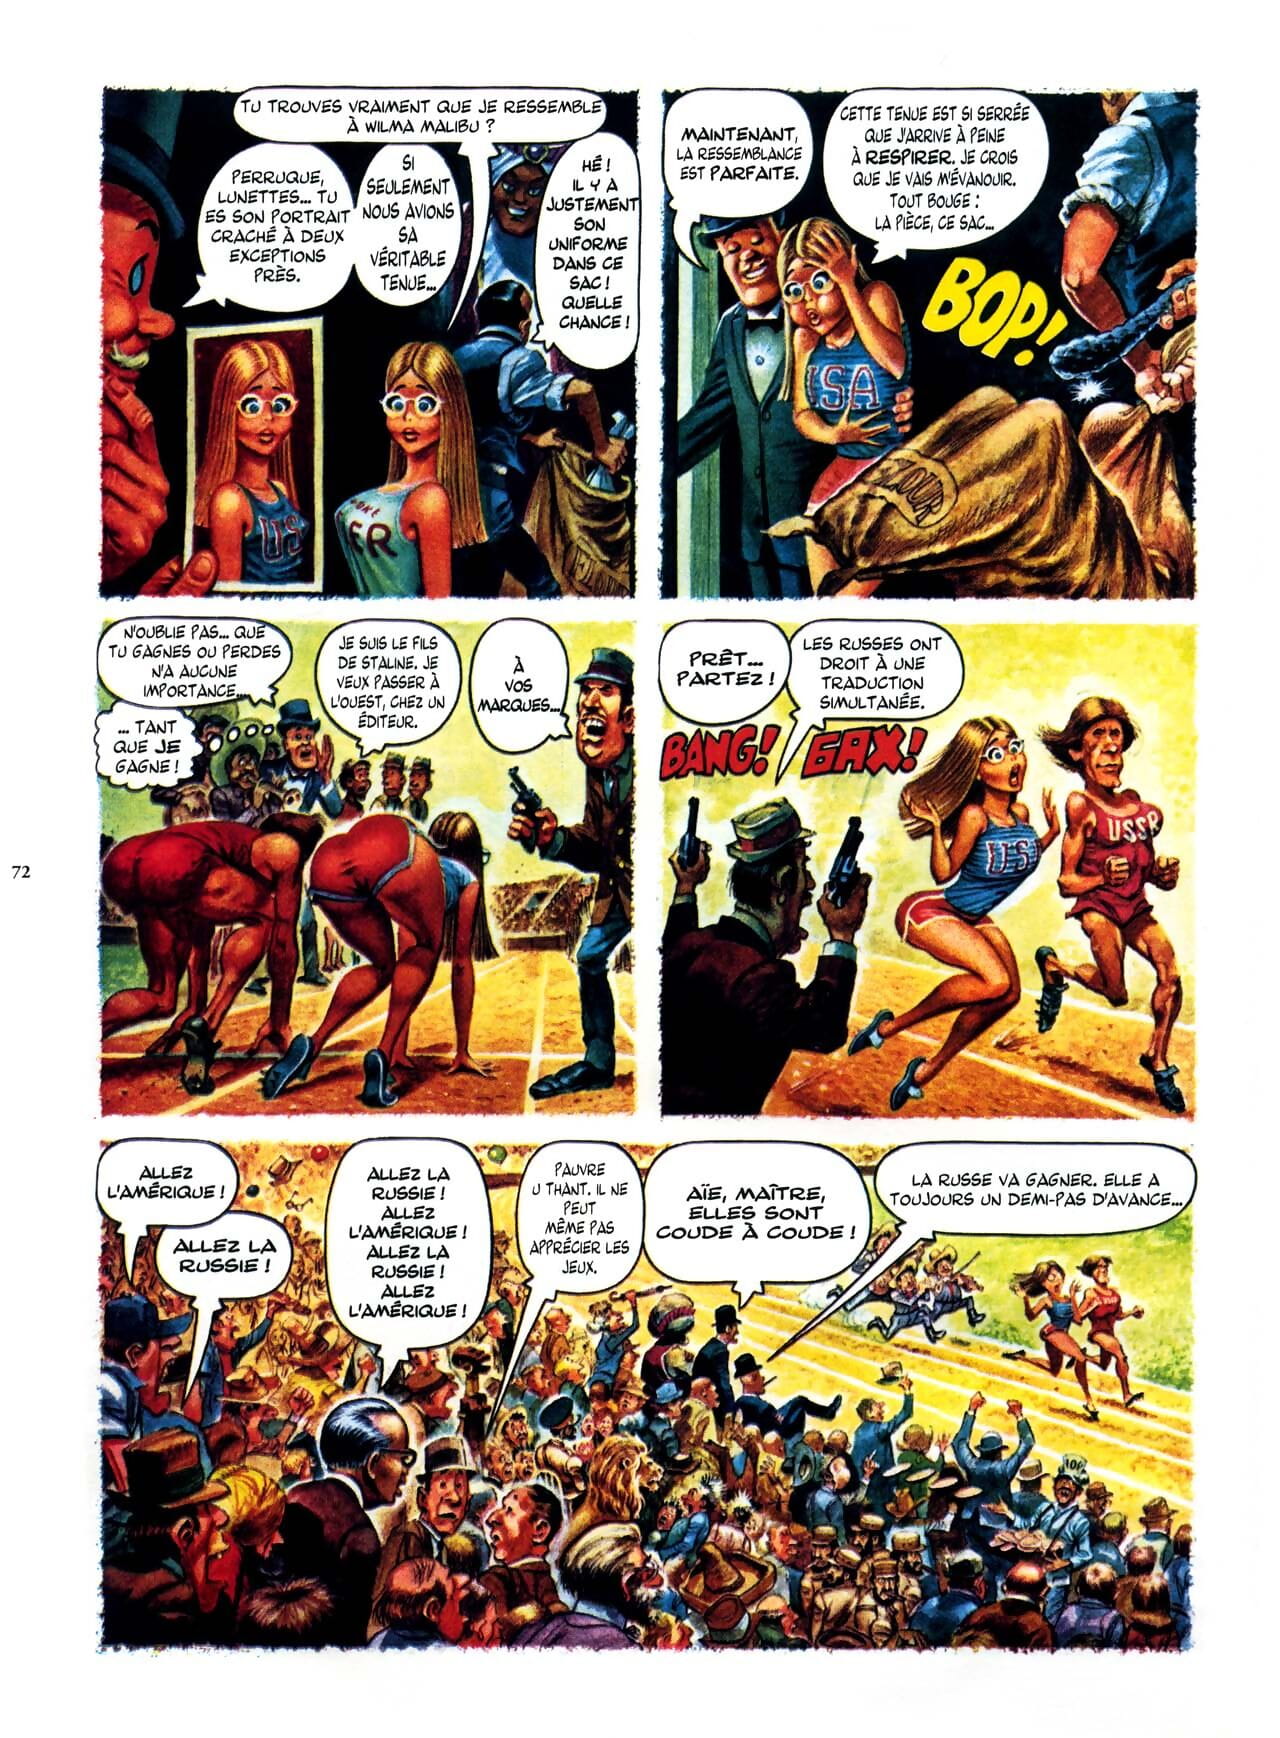 Playboys Little Annie Fanny Vol. 2 - 1965-1970 - part 4 page 1